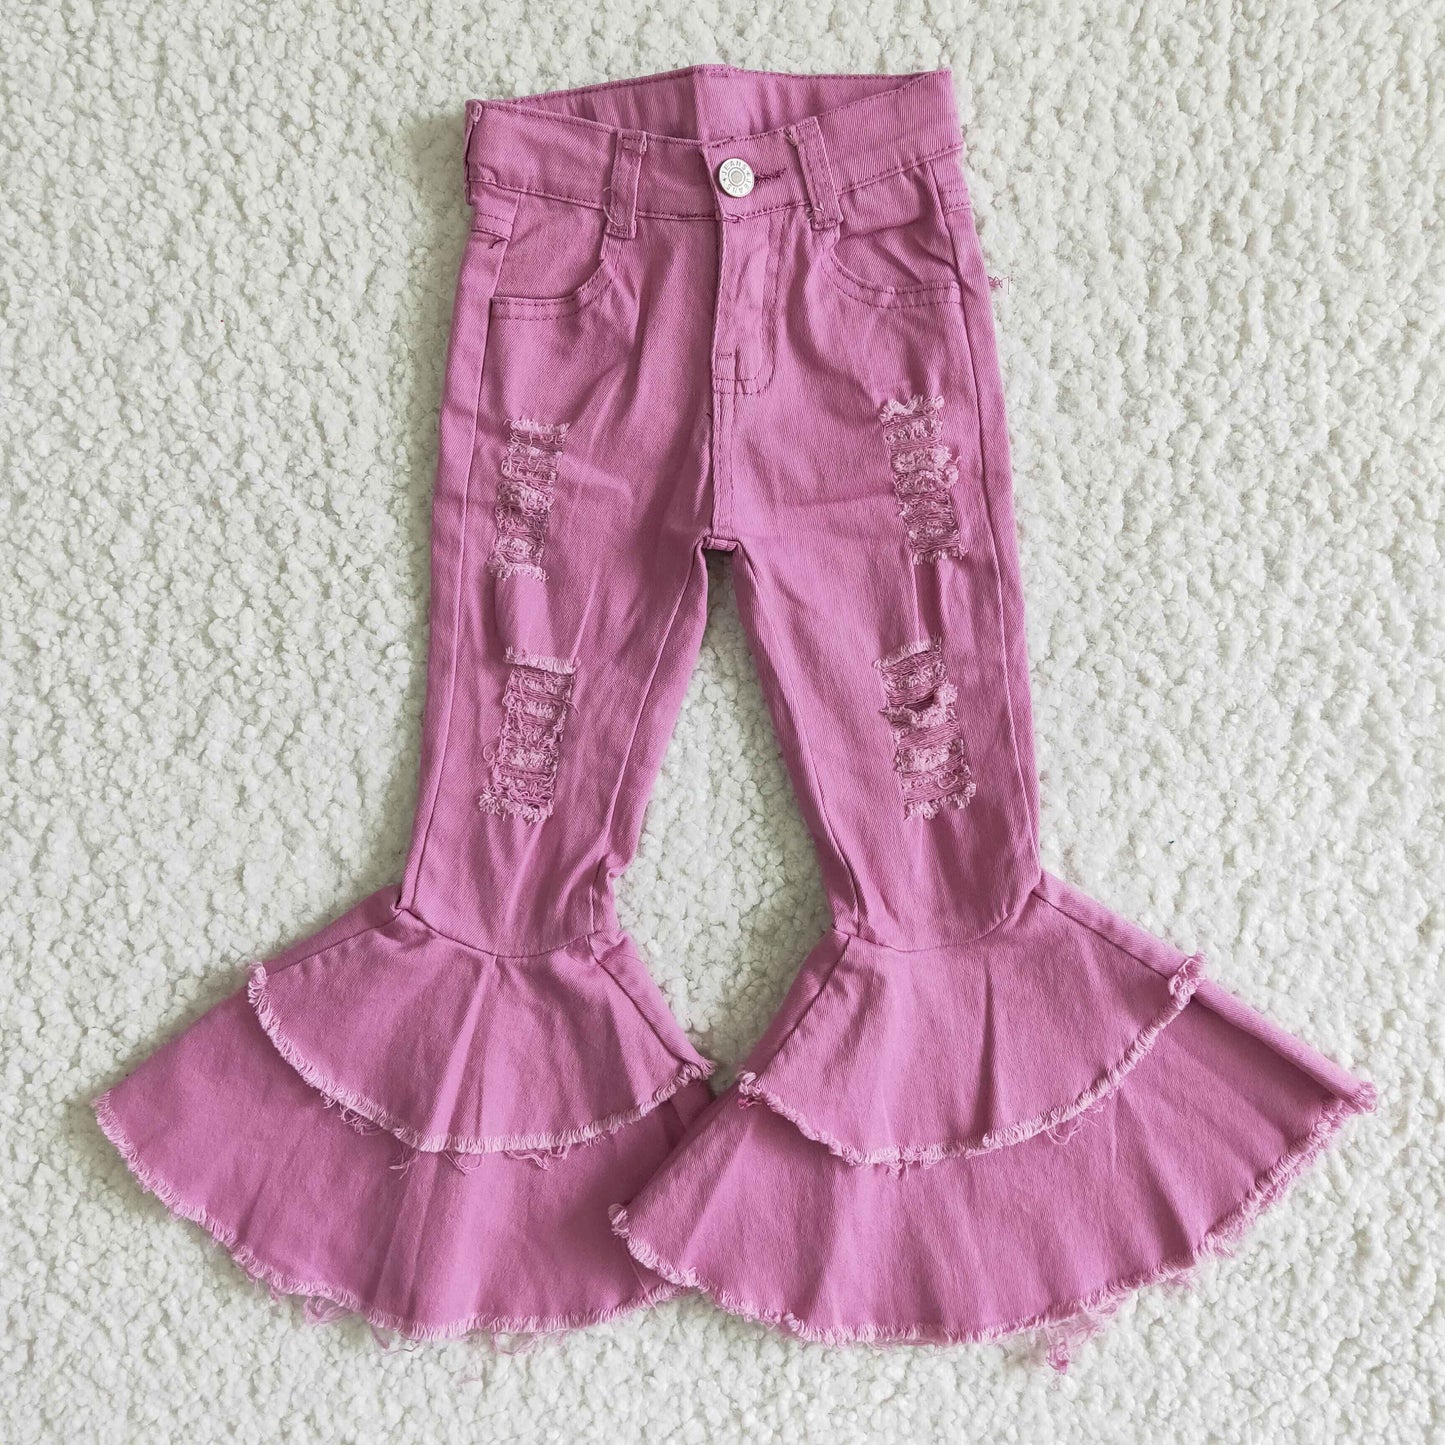 kids girl's clothing ruffle lavender denim jeans pants